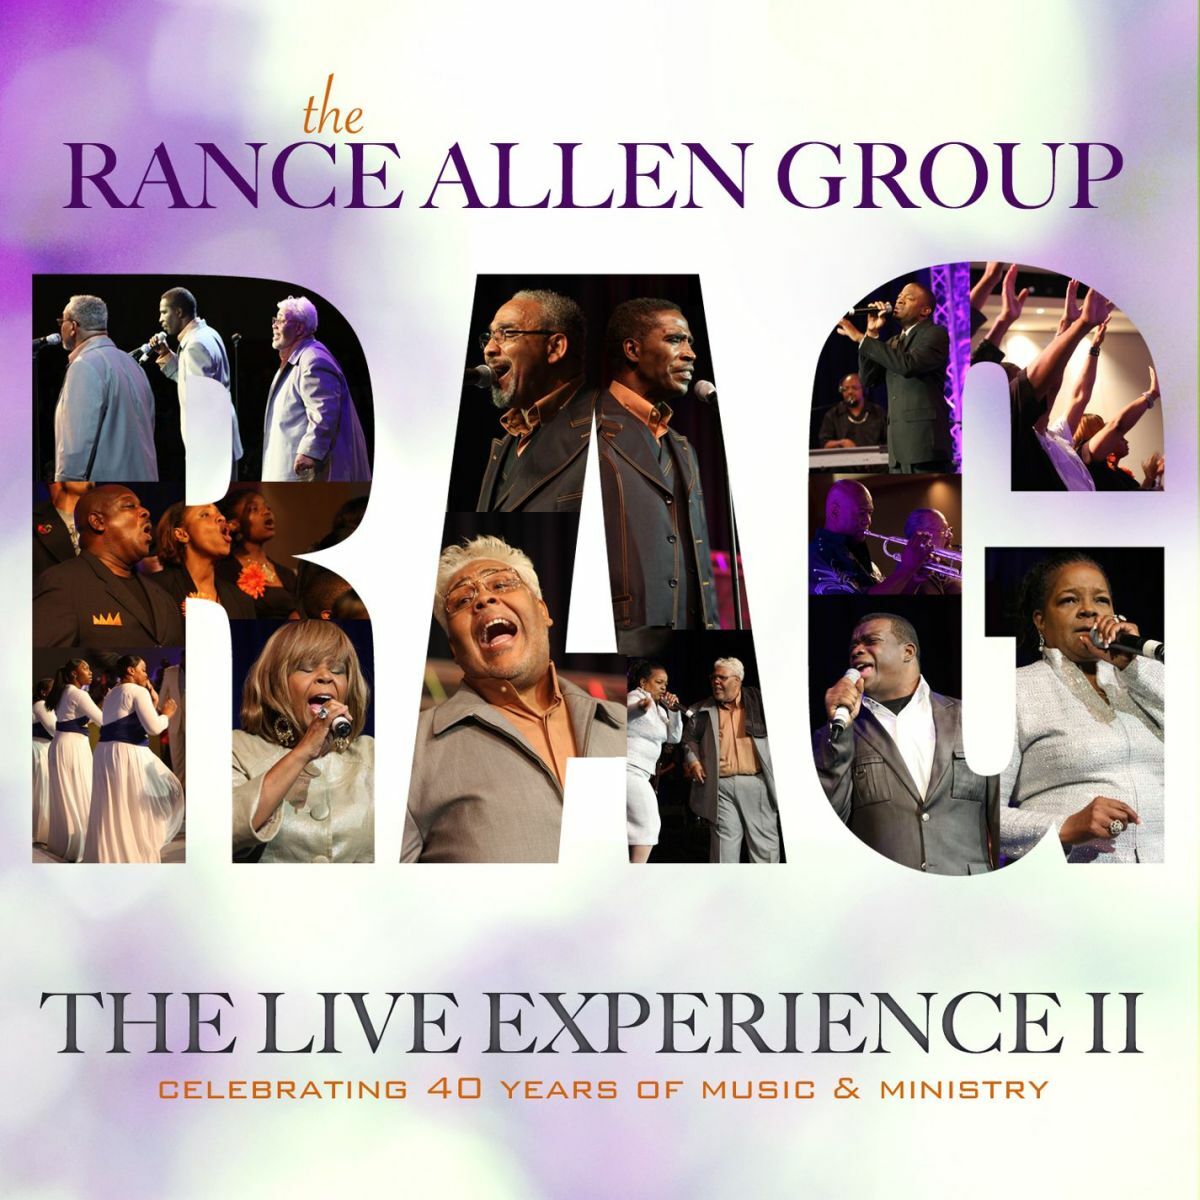 The Rance Allen Group: albums, songs, playlists | Listen on Deezer